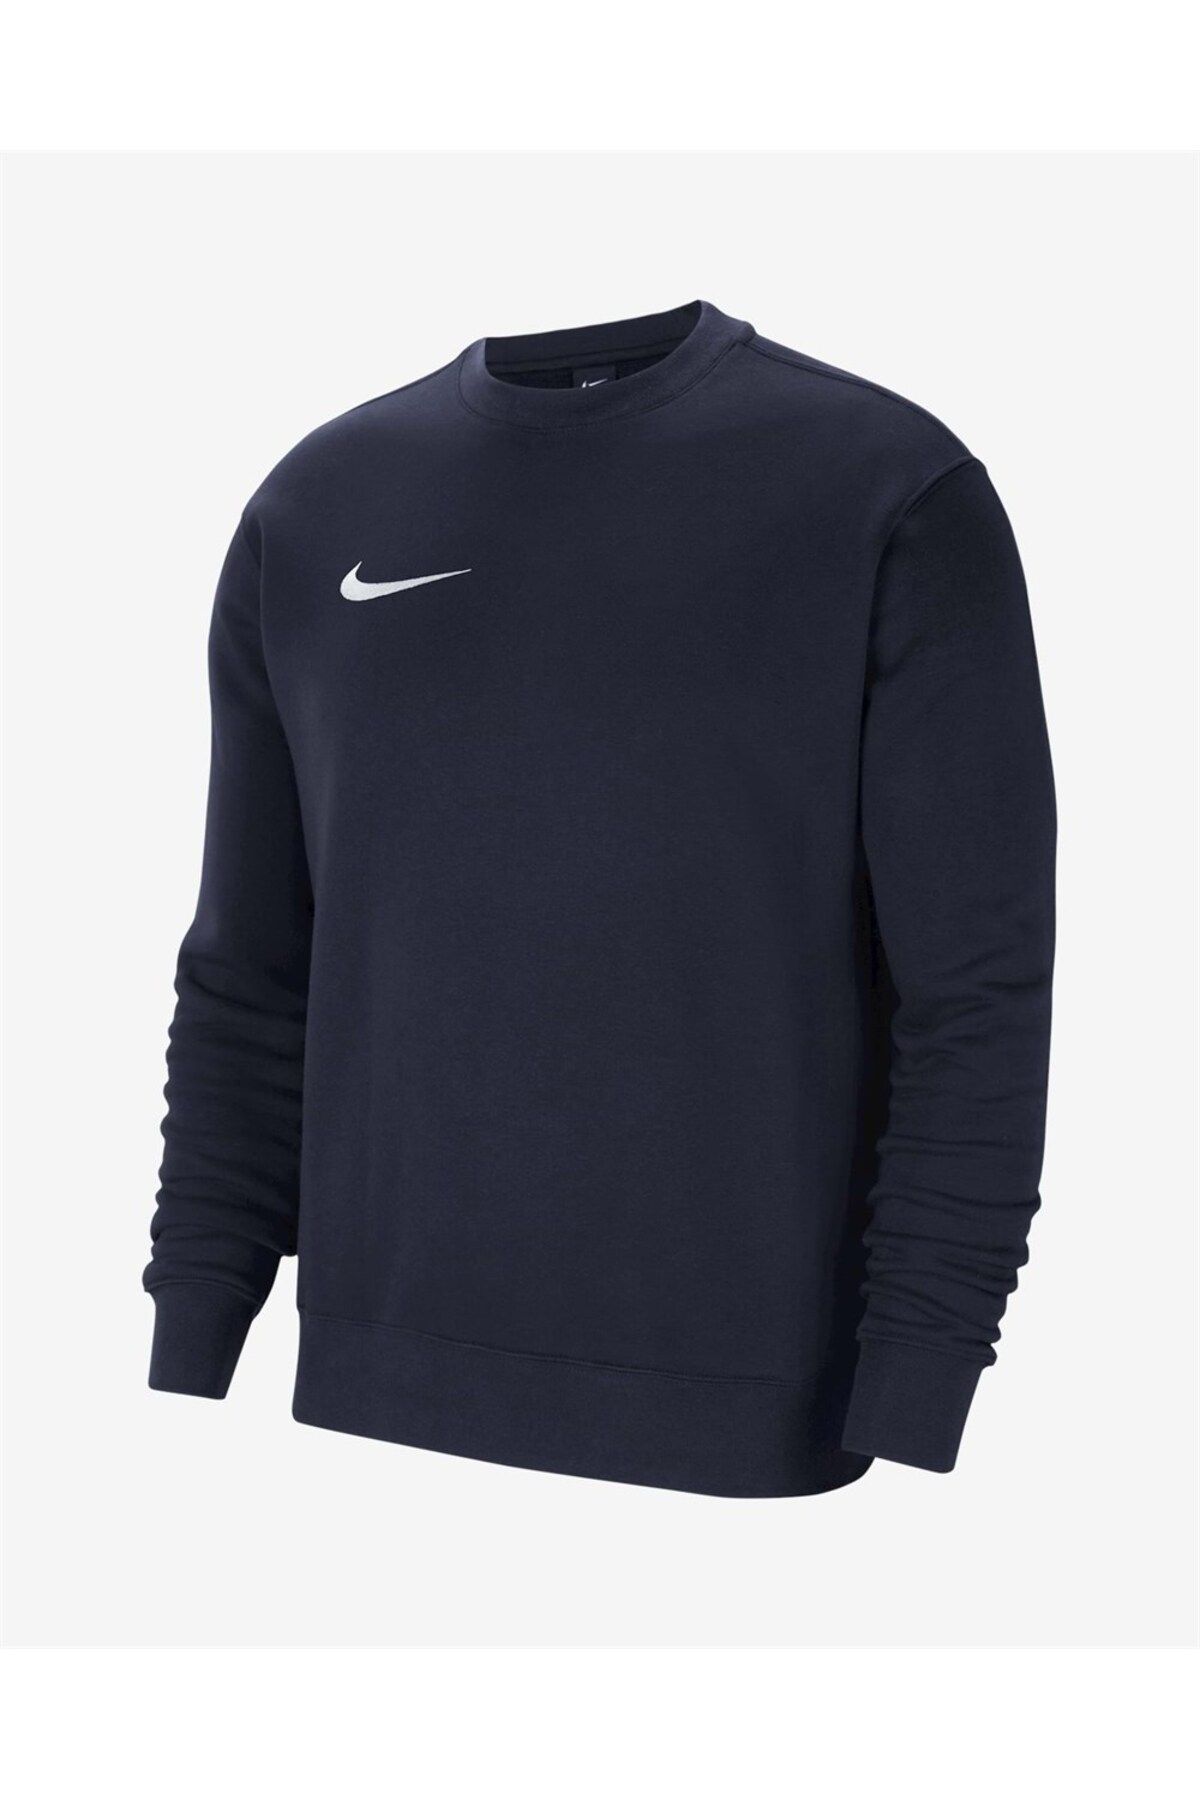 Nike Cw6902-451 Team Park 20 Erkek Sweatshirt